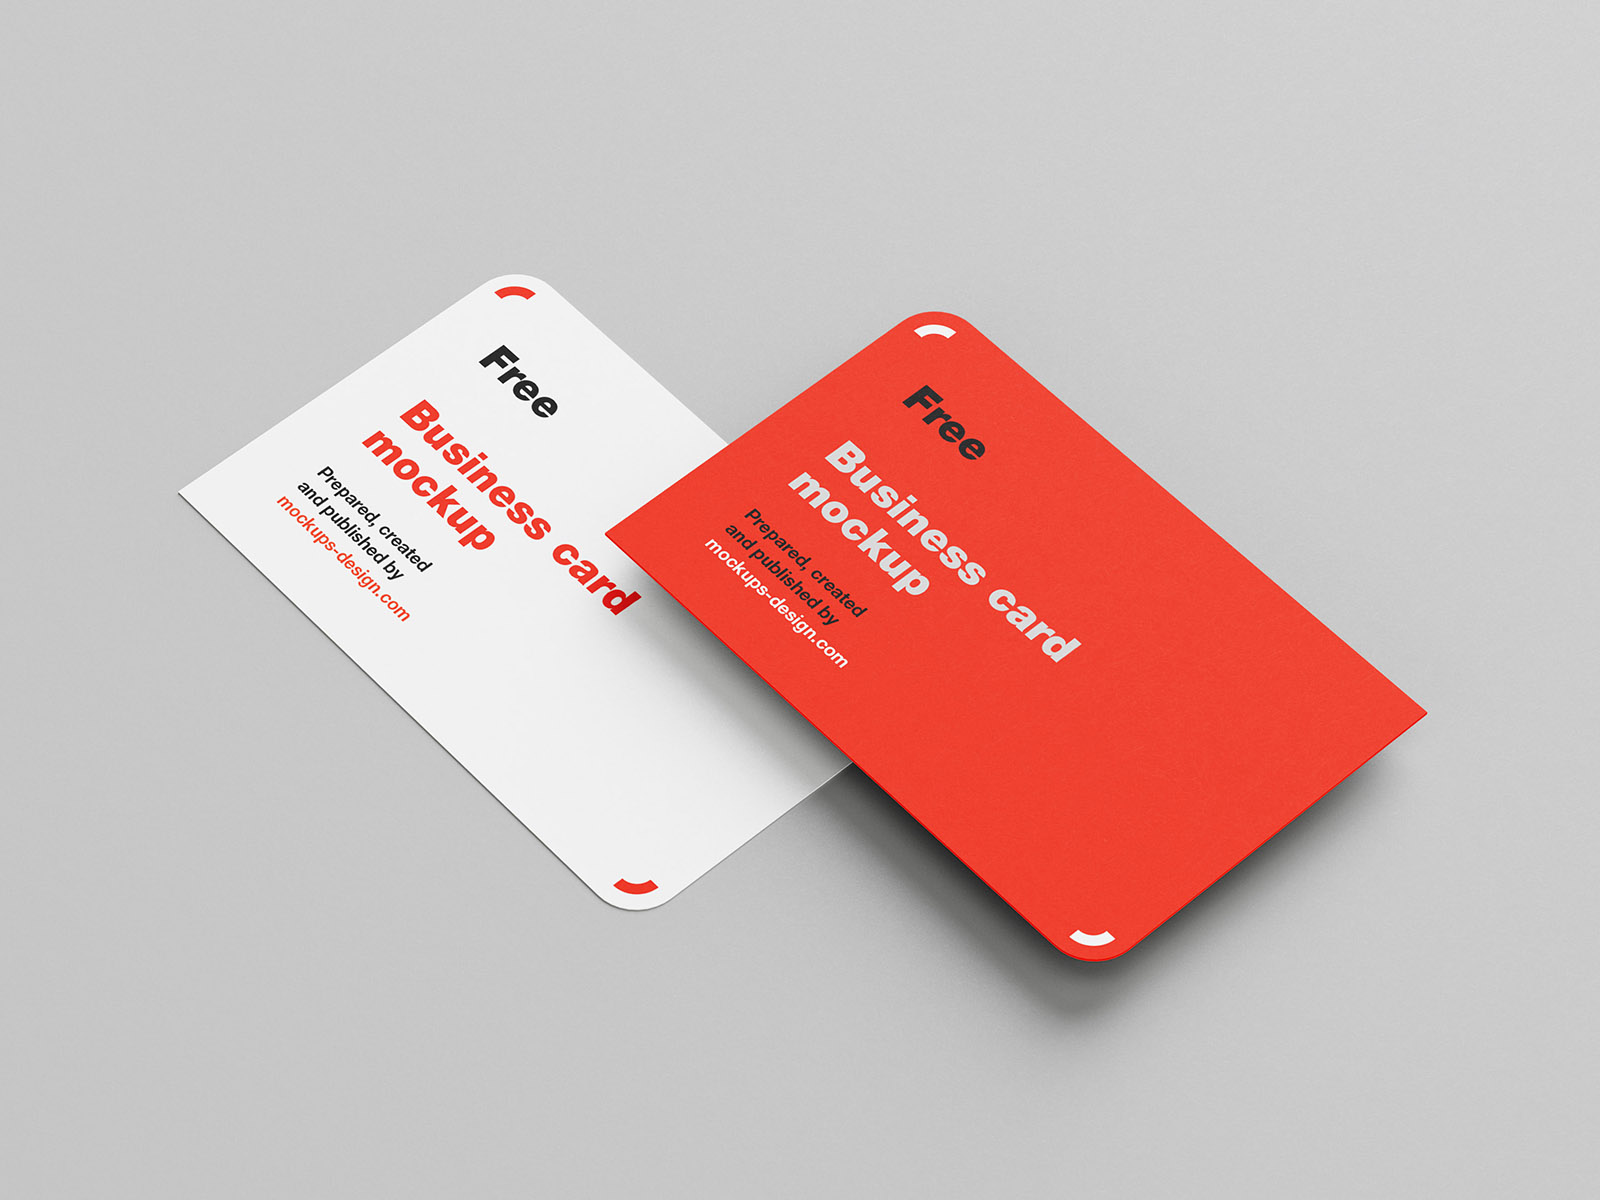 Round Corners Business Card Mockup (PSD)